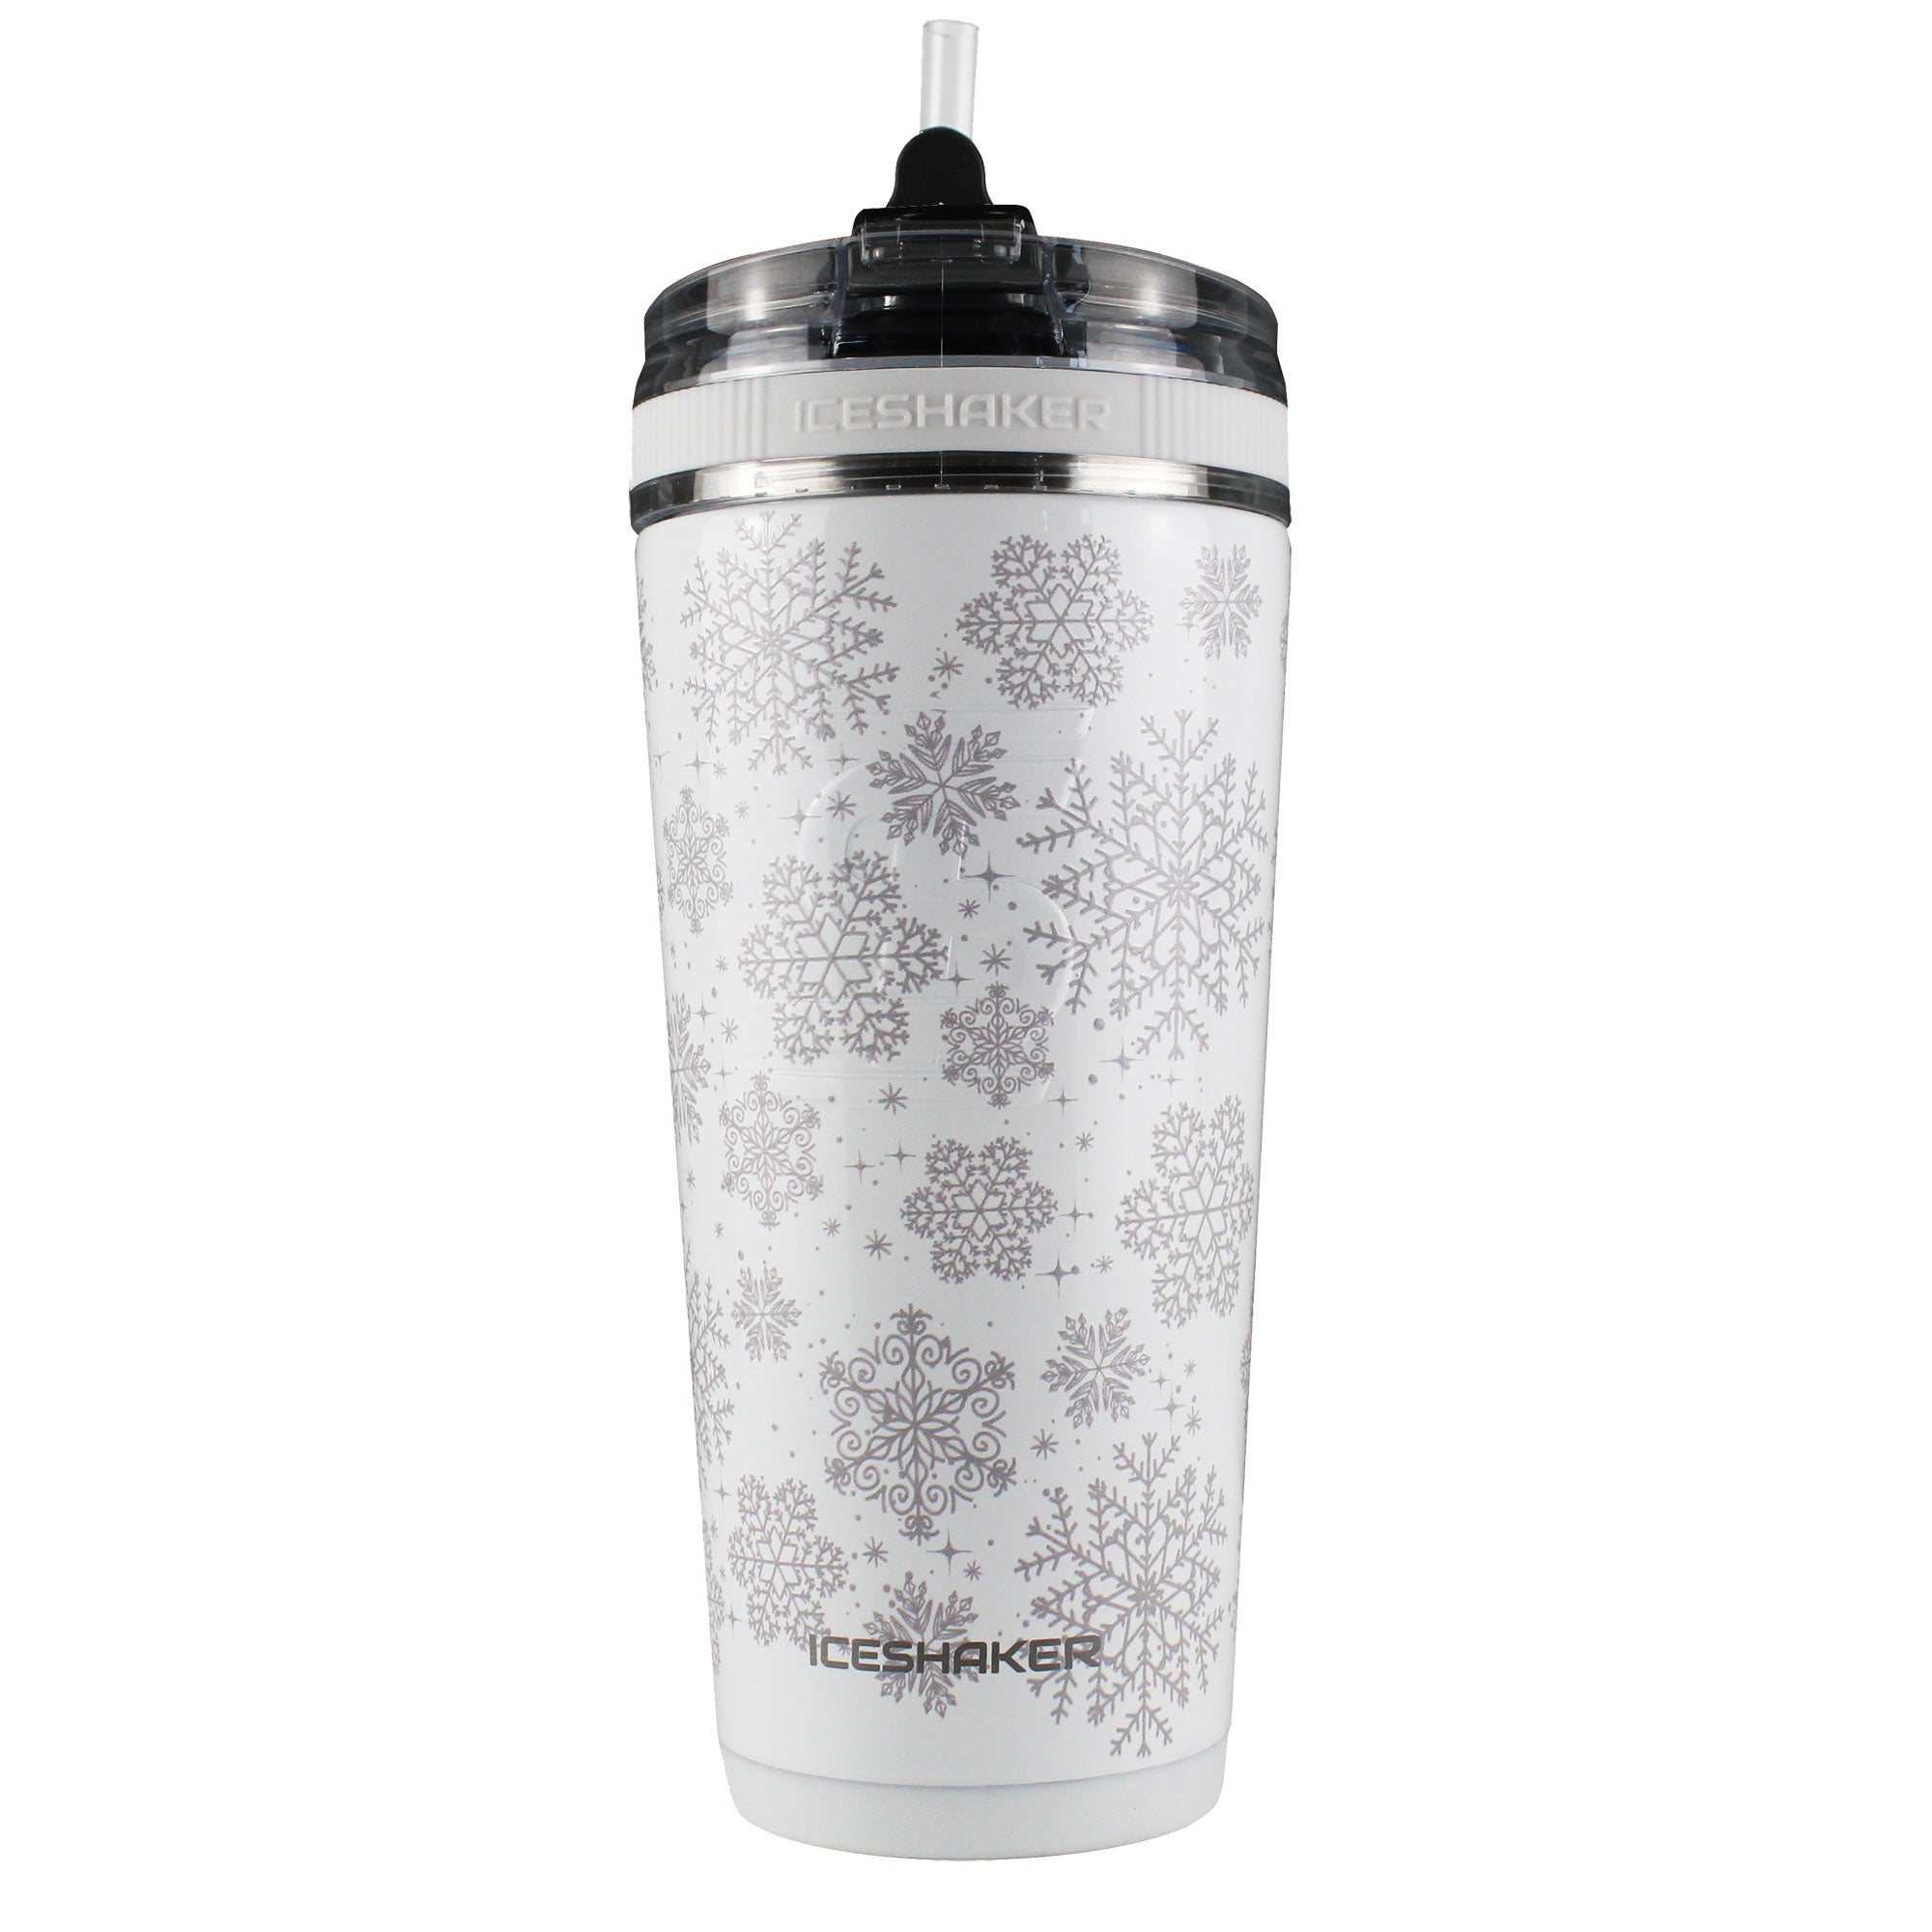 26 ounce Vacuum Insulated Stainless Steel Shaker Bottle - Winmark